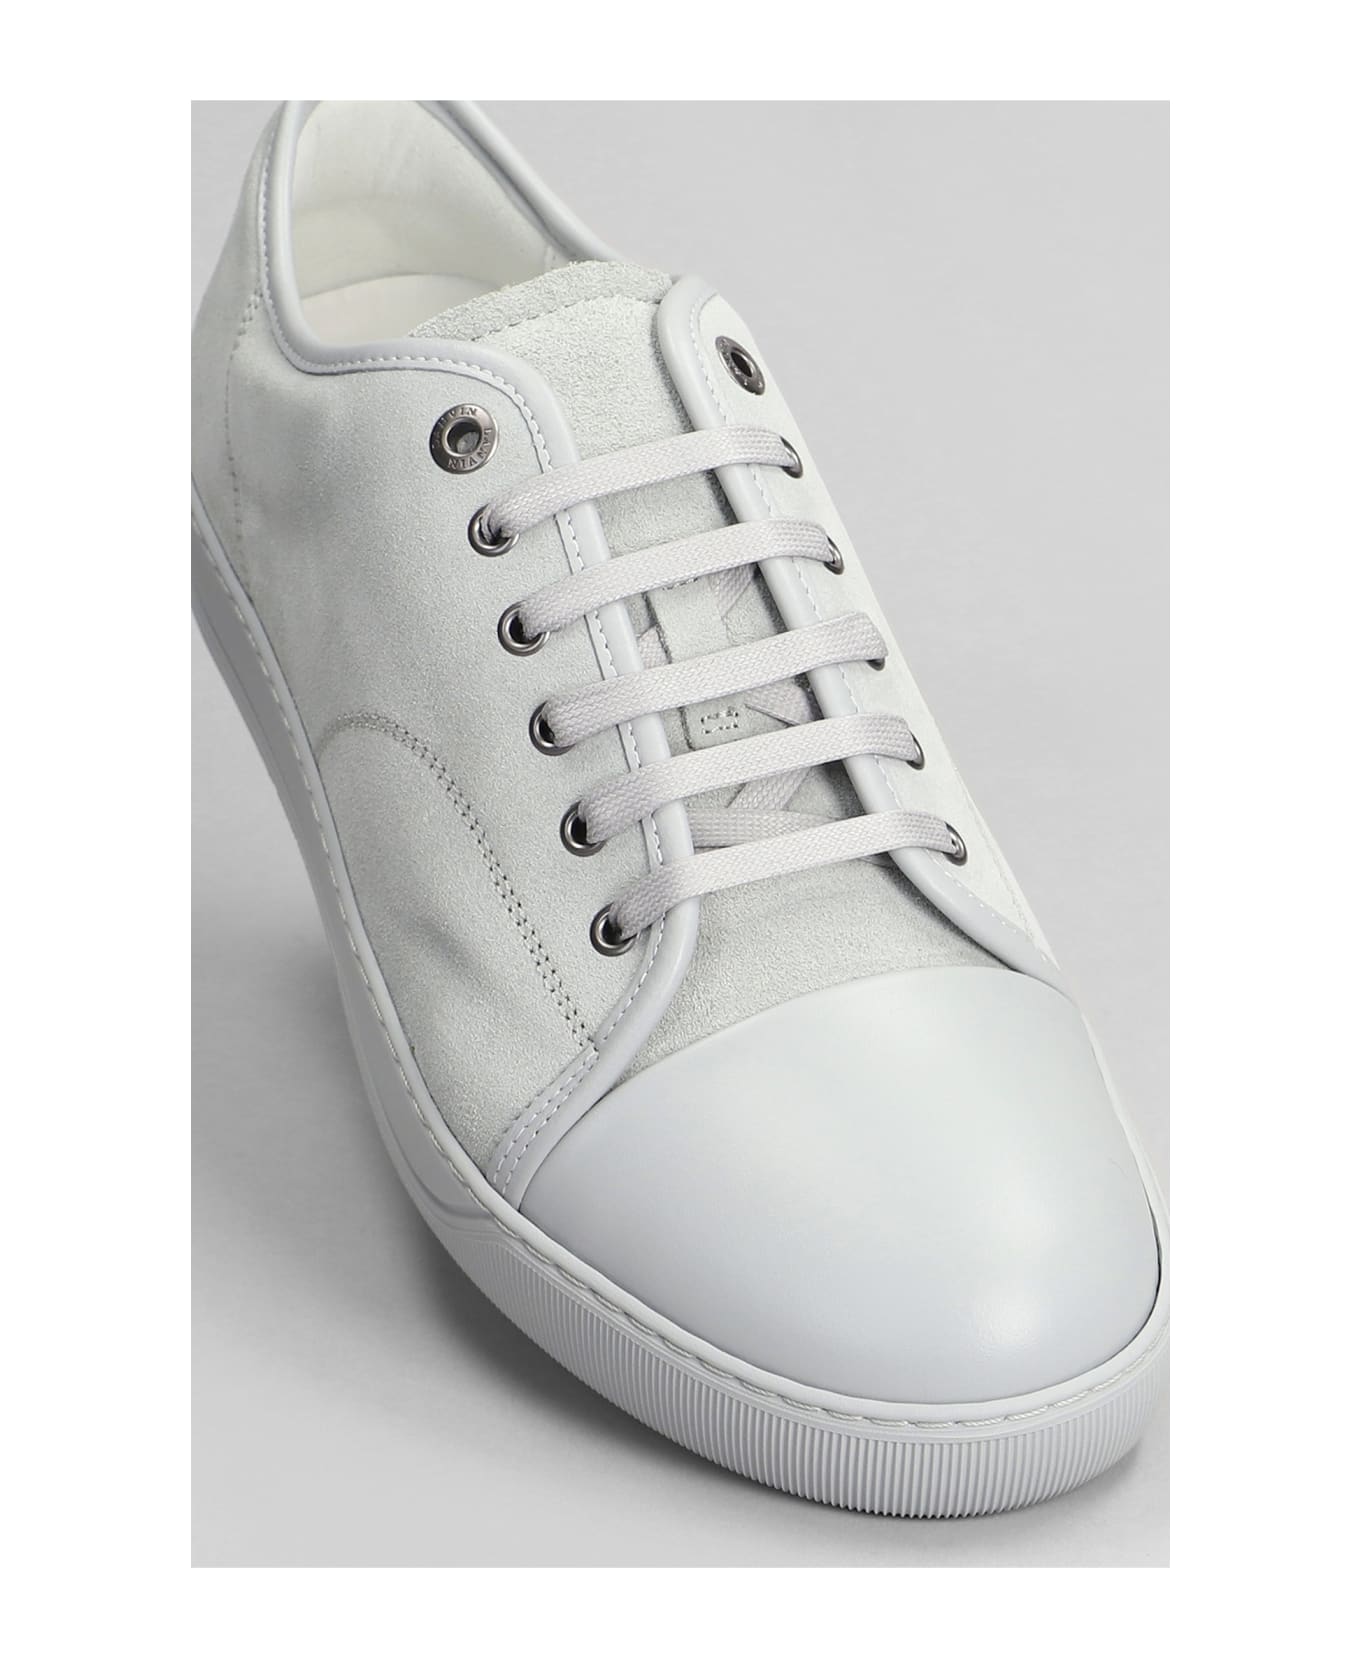 Lanvin Dbb1 Sneakers In Grey Suede - grey スニーカー